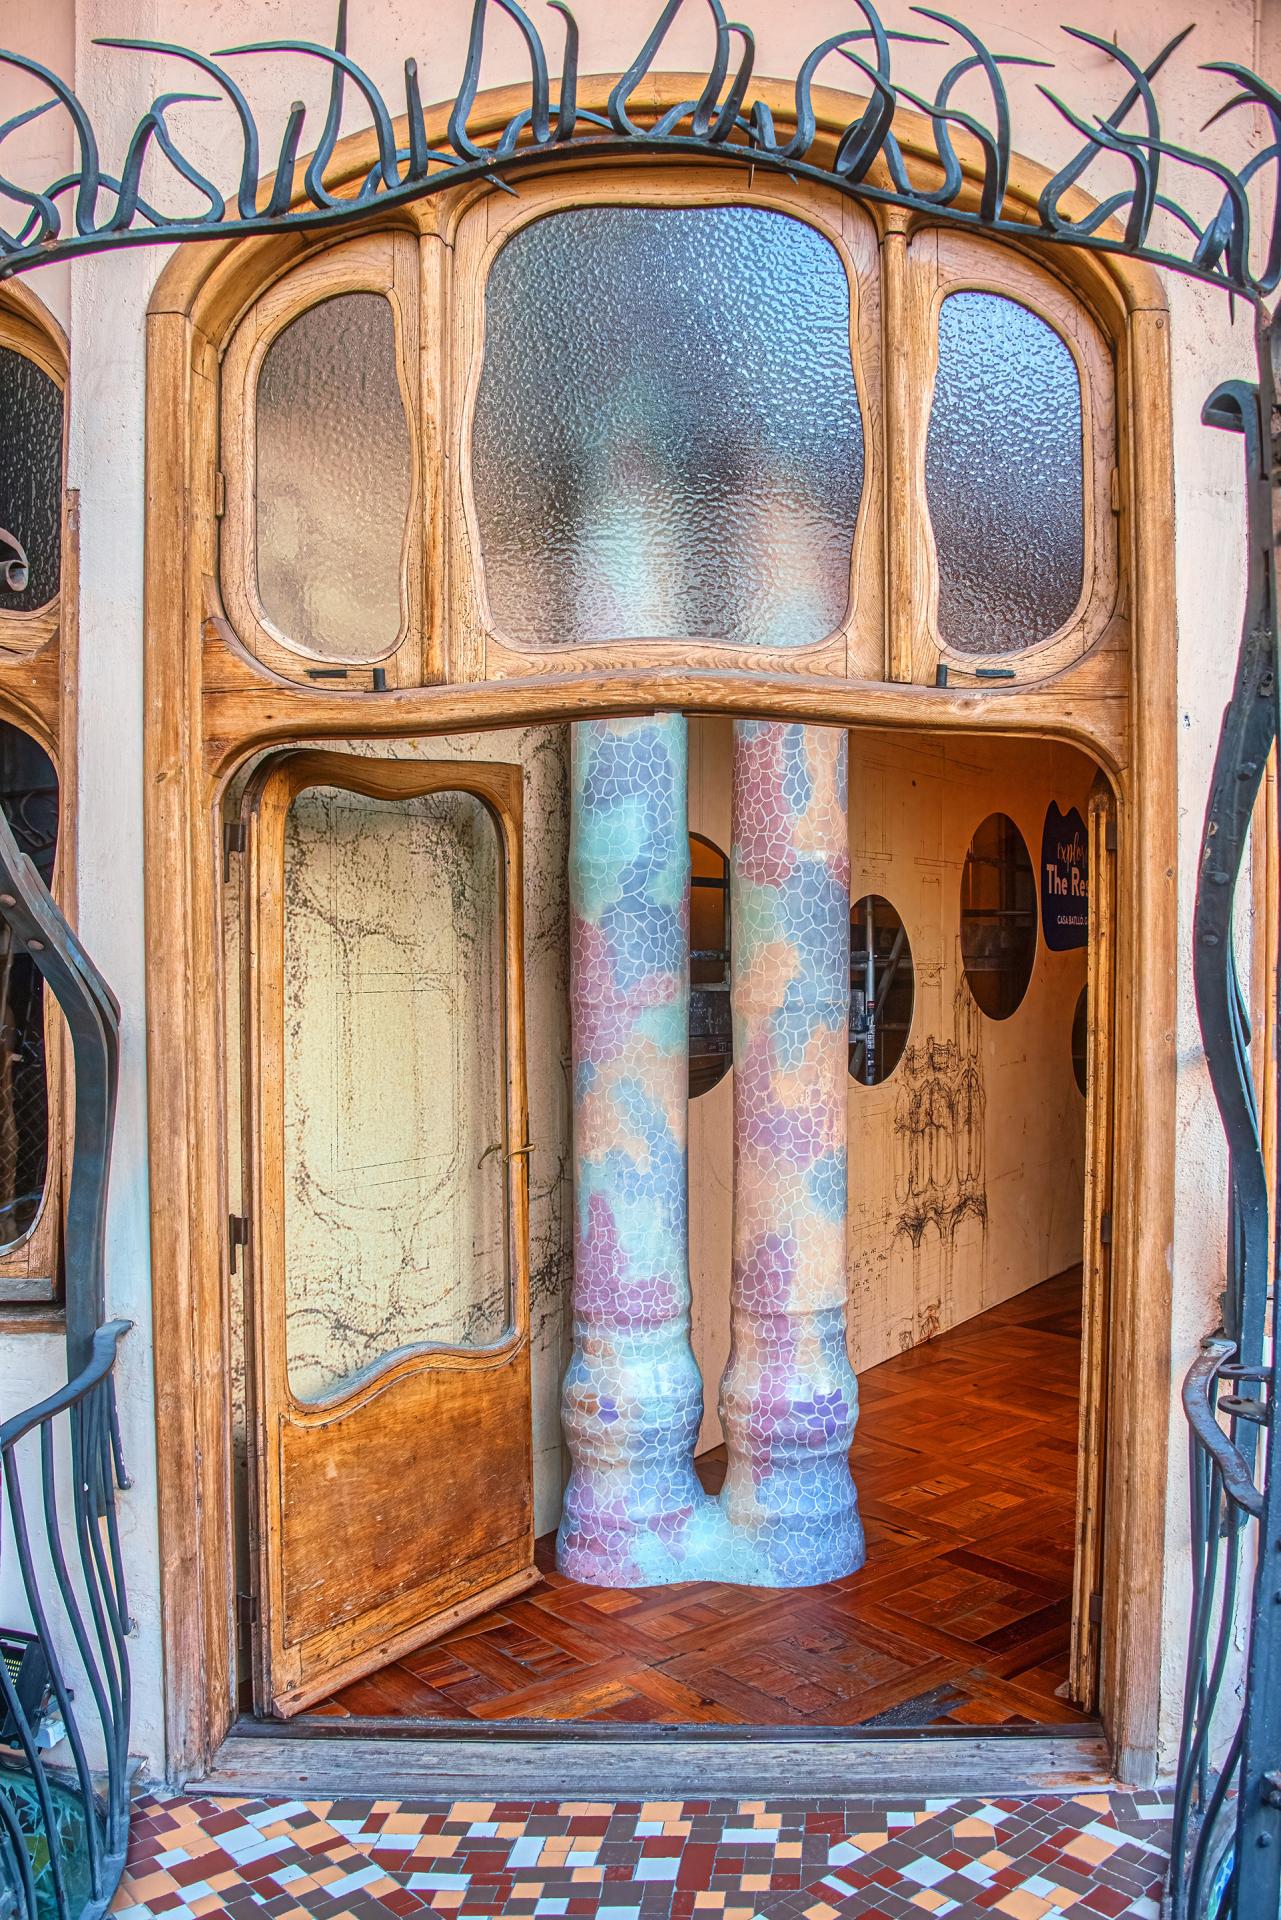 New York Photography Awards Winner - Casa Batlló, Columns in the Doorway